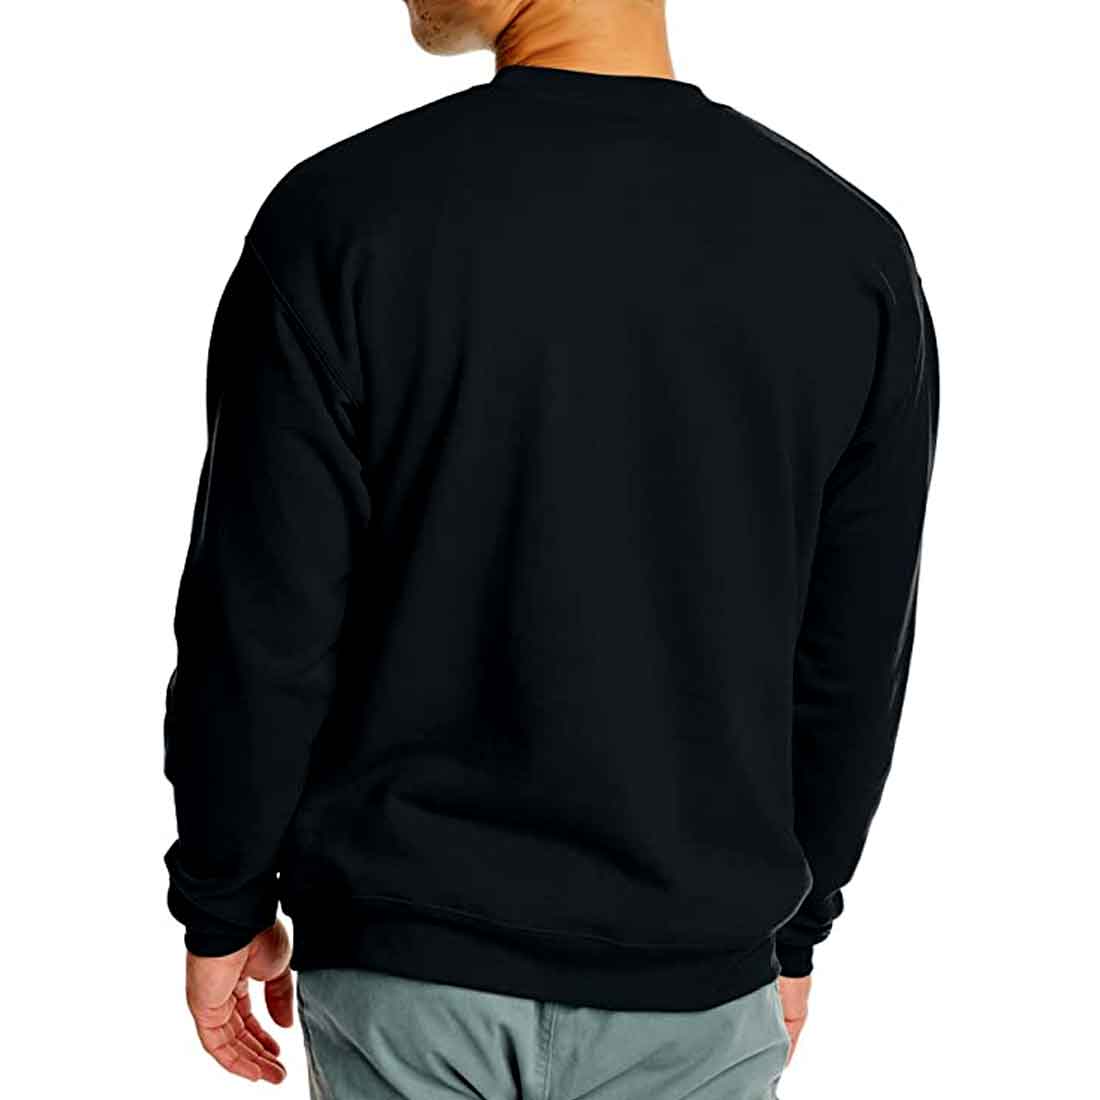 Black Crewneck Sweatshirt for Men Regular Use - Non Stop